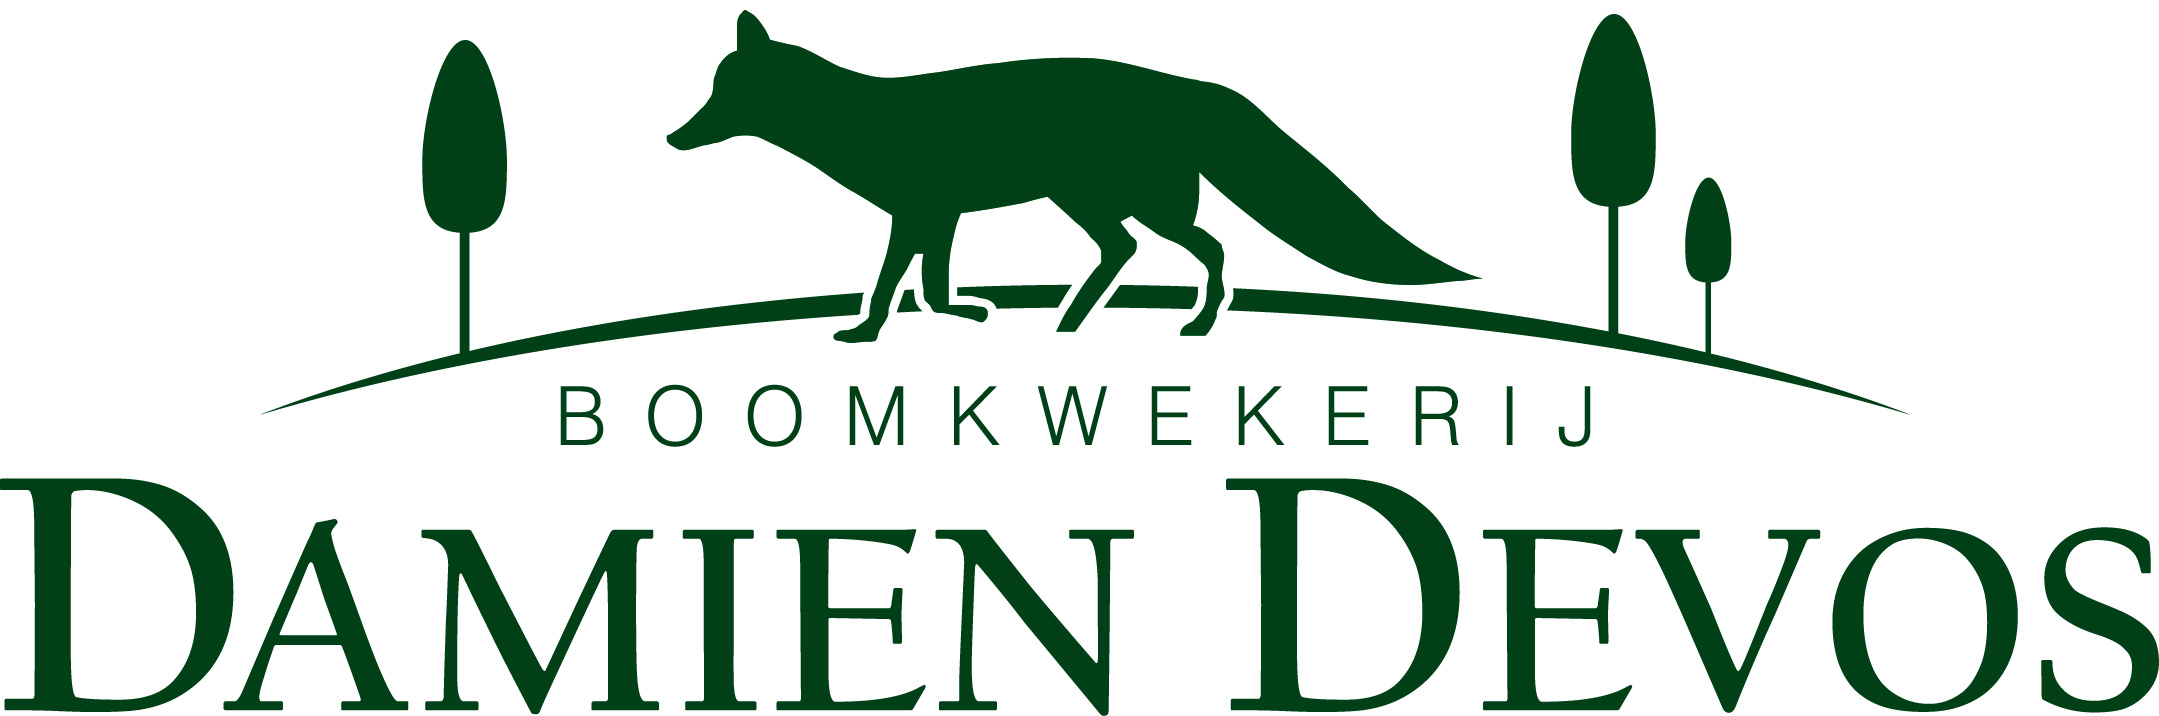 Boomkwekerij Damien Devos logo